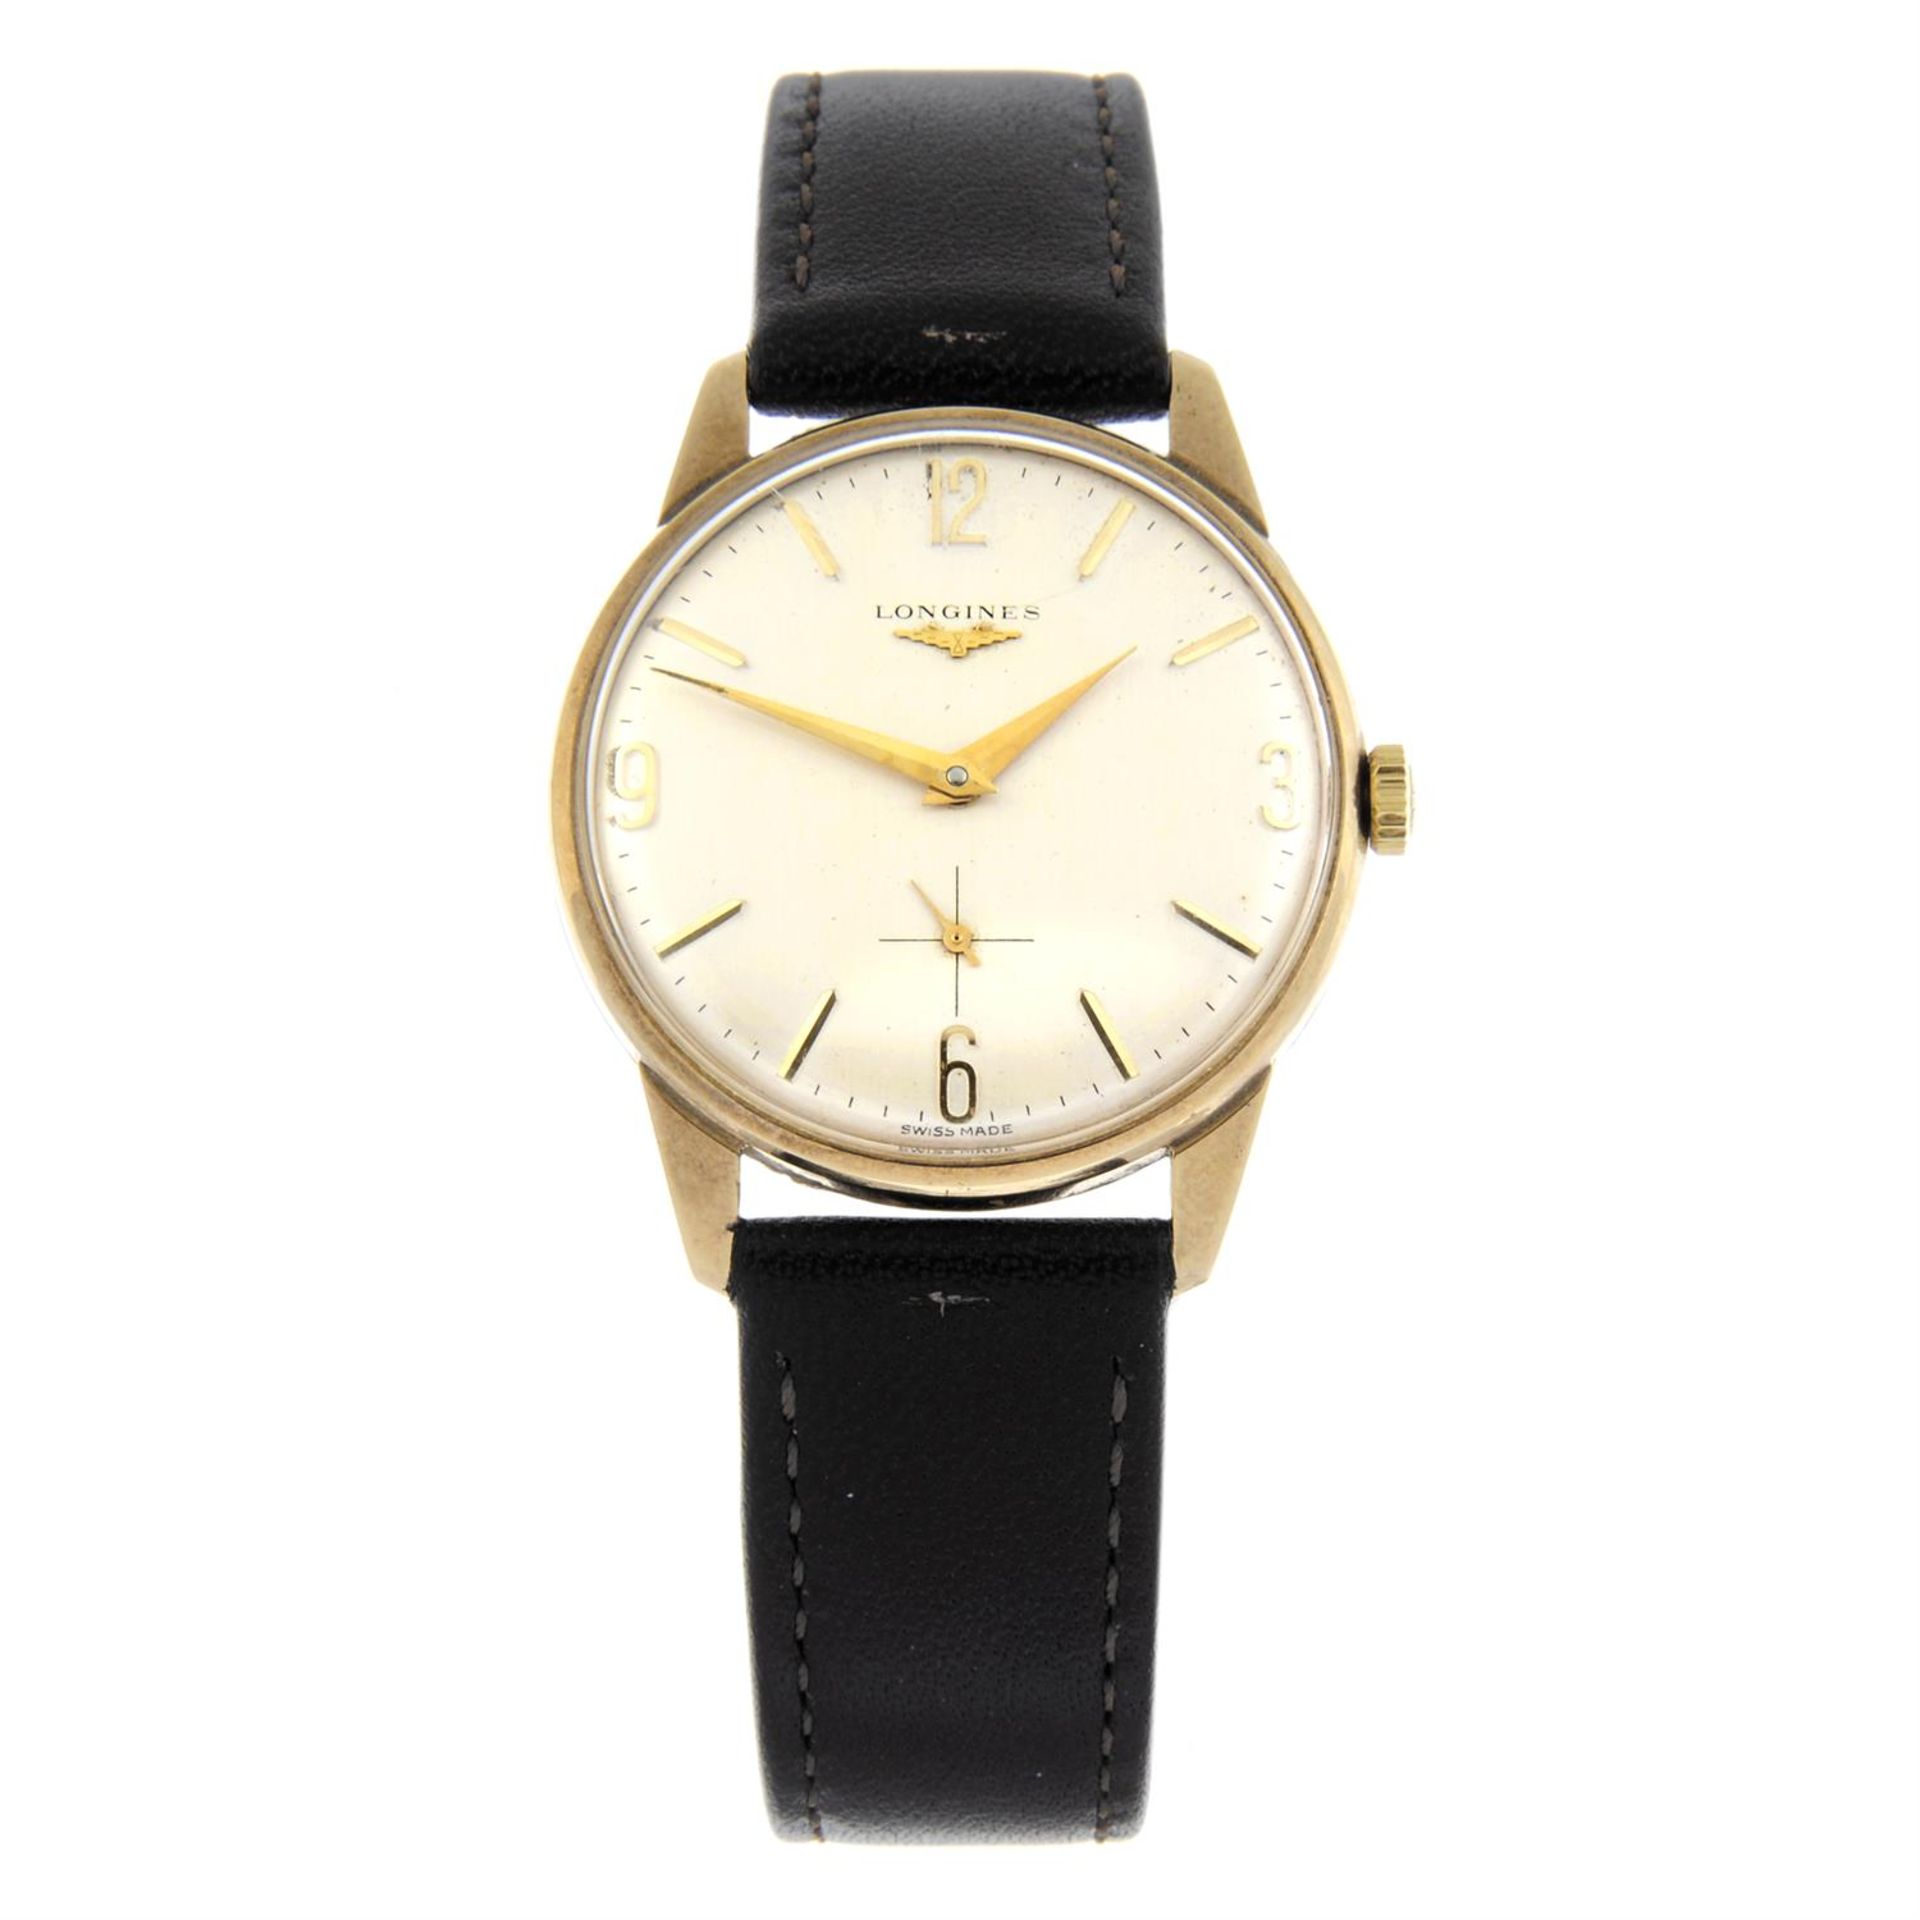 LONGINES - a yellow metal wrist watch, 33mm.